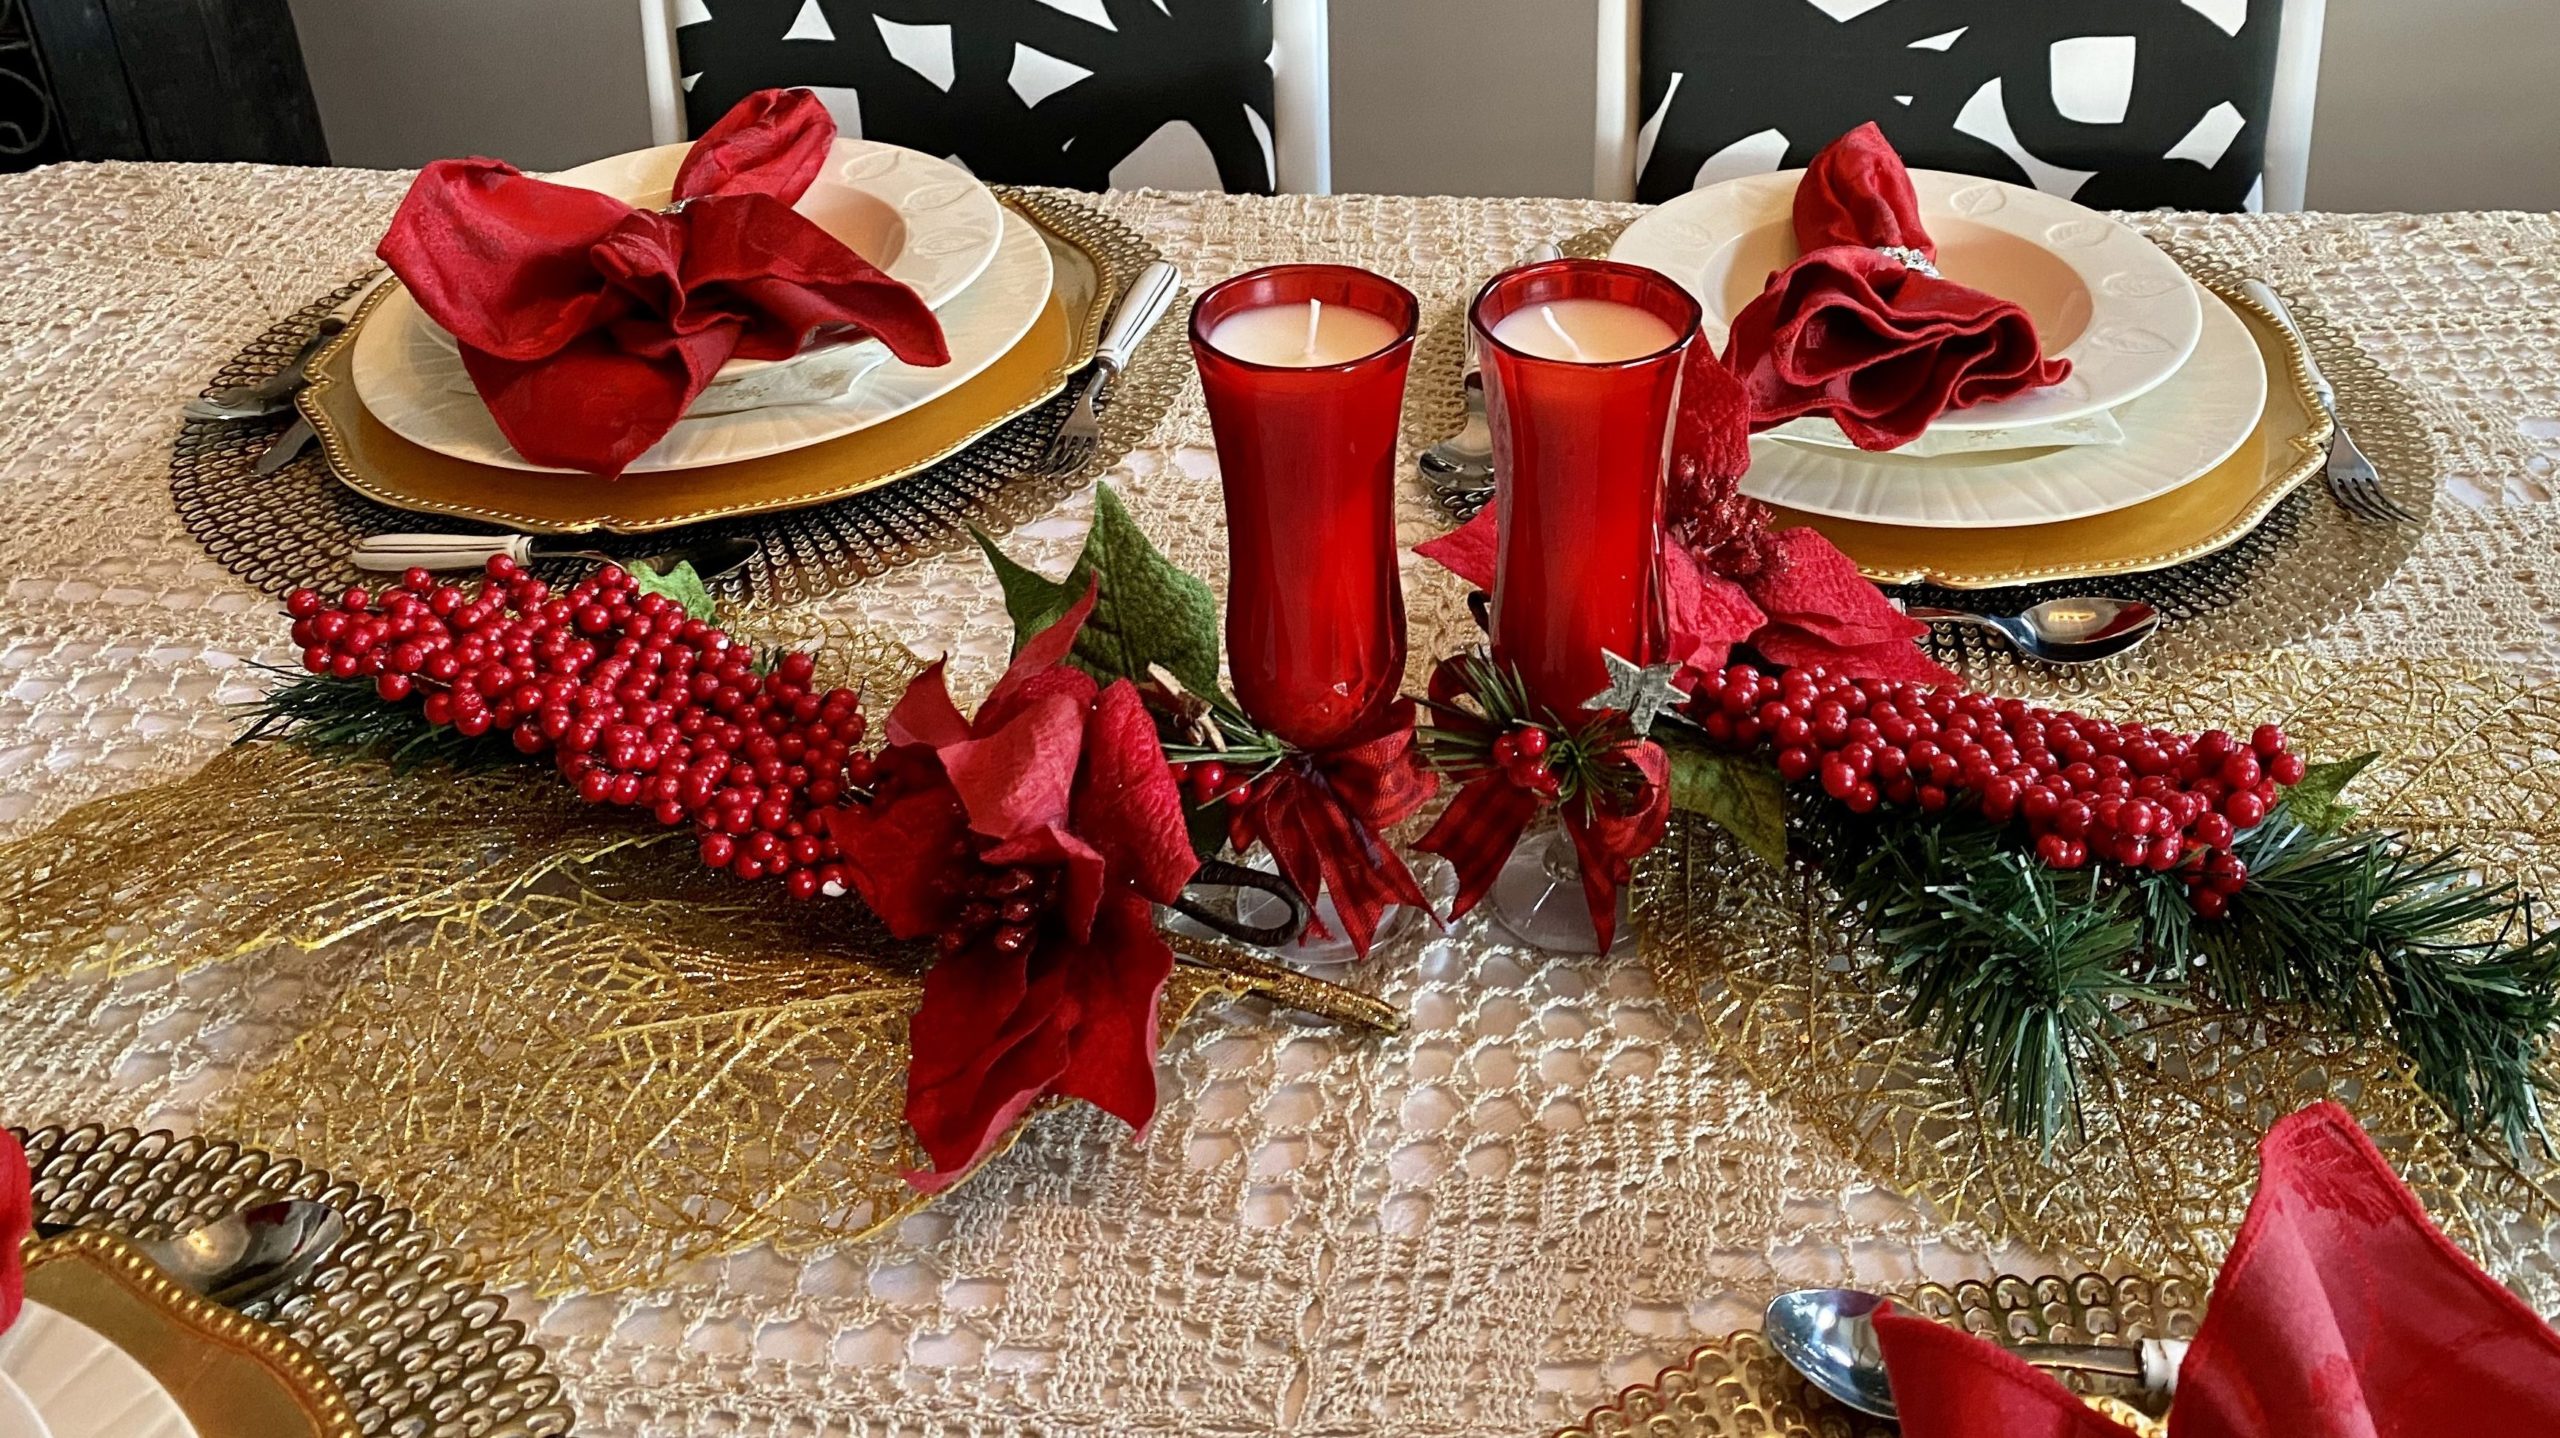 A table set for Wigilia, Christmas Eve dinner